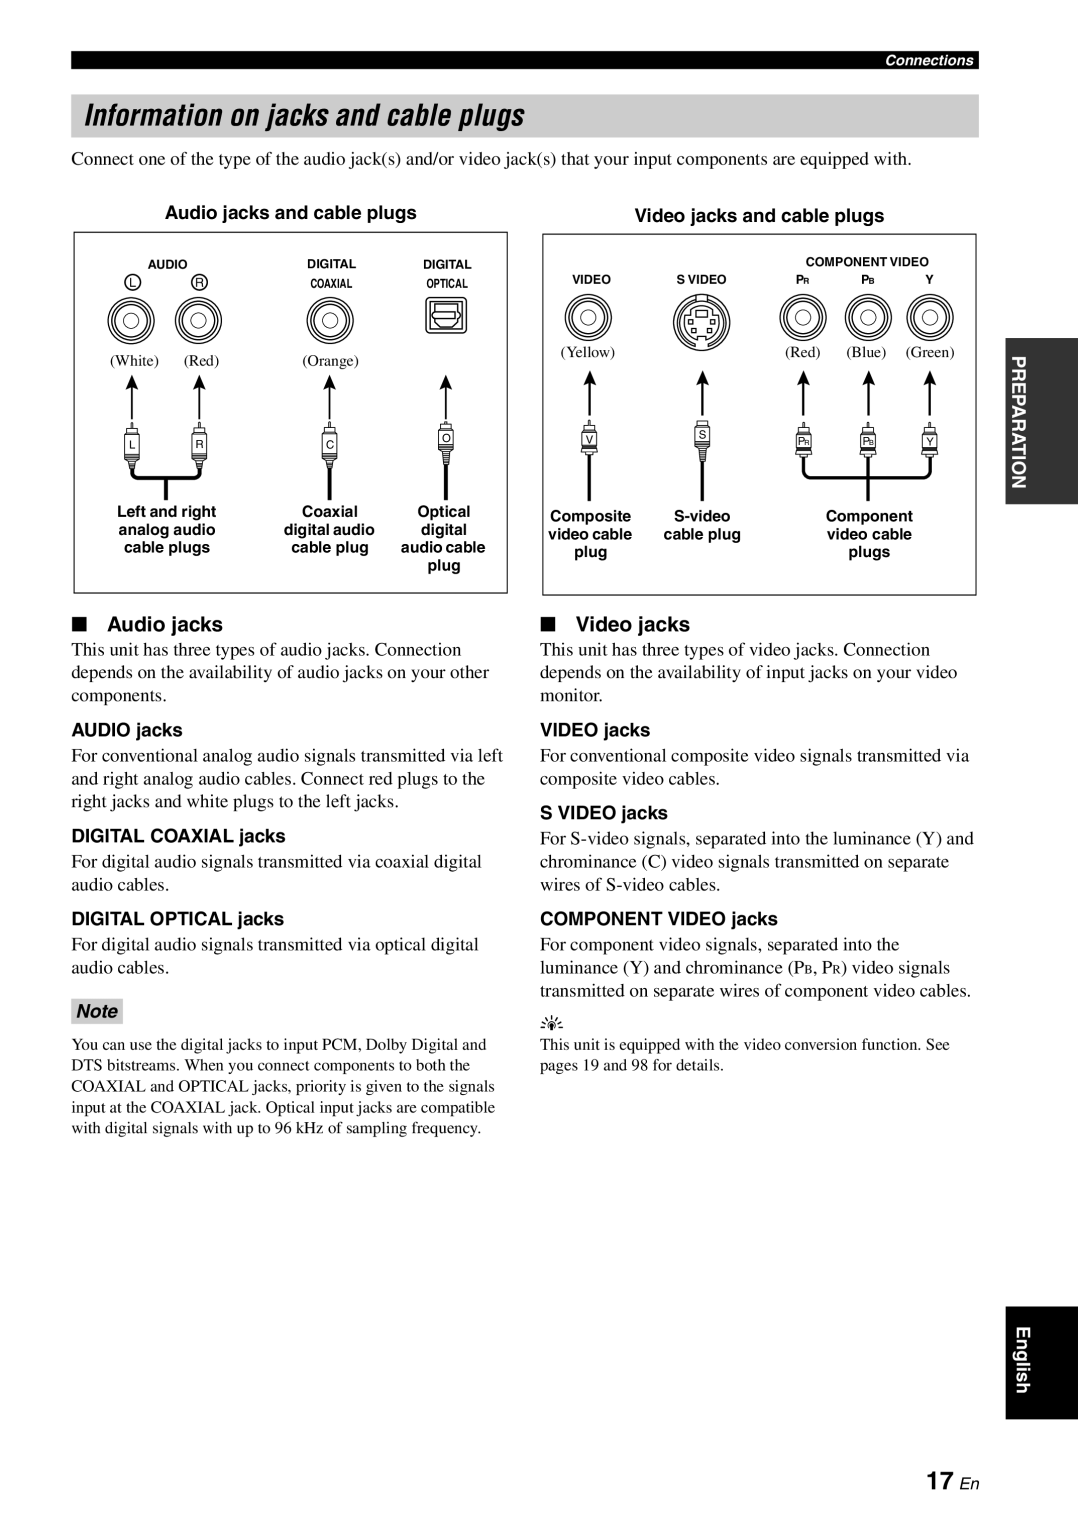 Yamaha HTR-6180 owner manual Information on jacks and cable plugs, 17 En, Audio jacks, Video jacks 